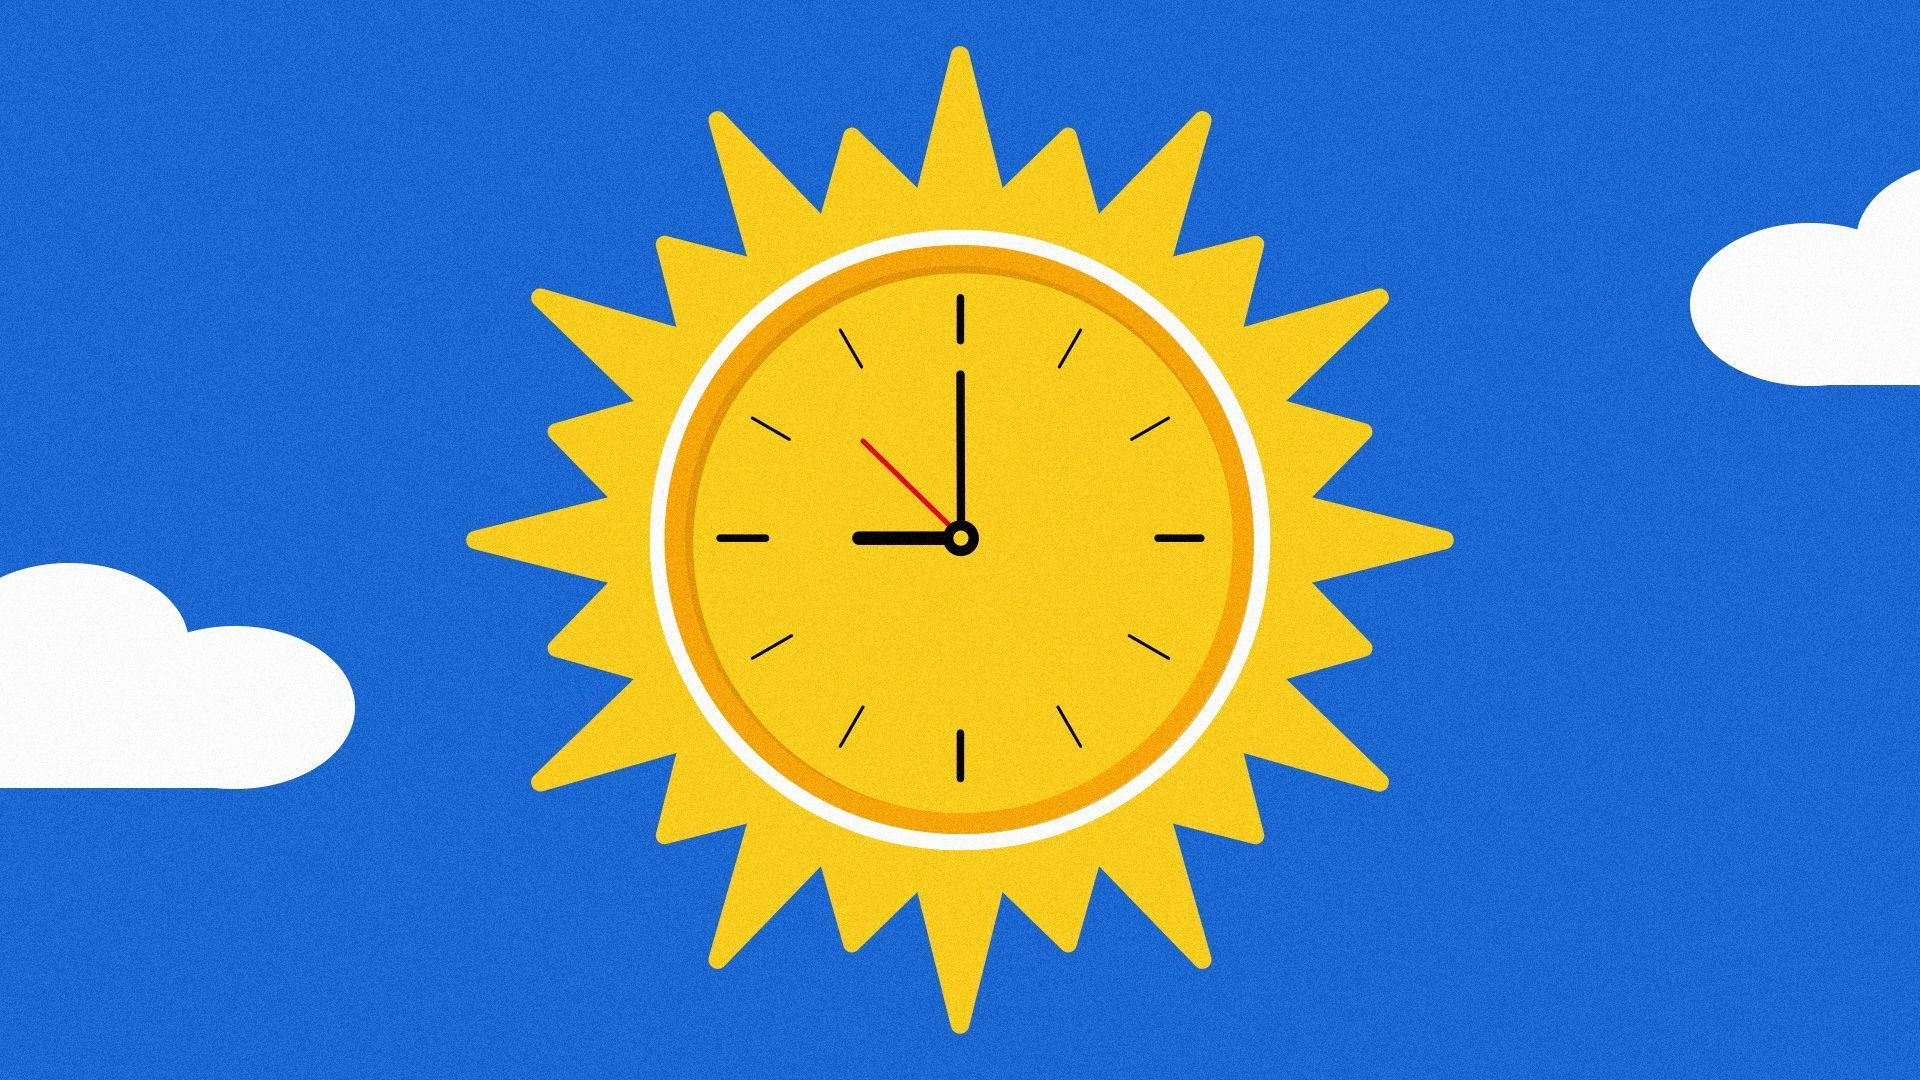 Daylight saving time 2023: Is it ending? Sunshine Protection Act status